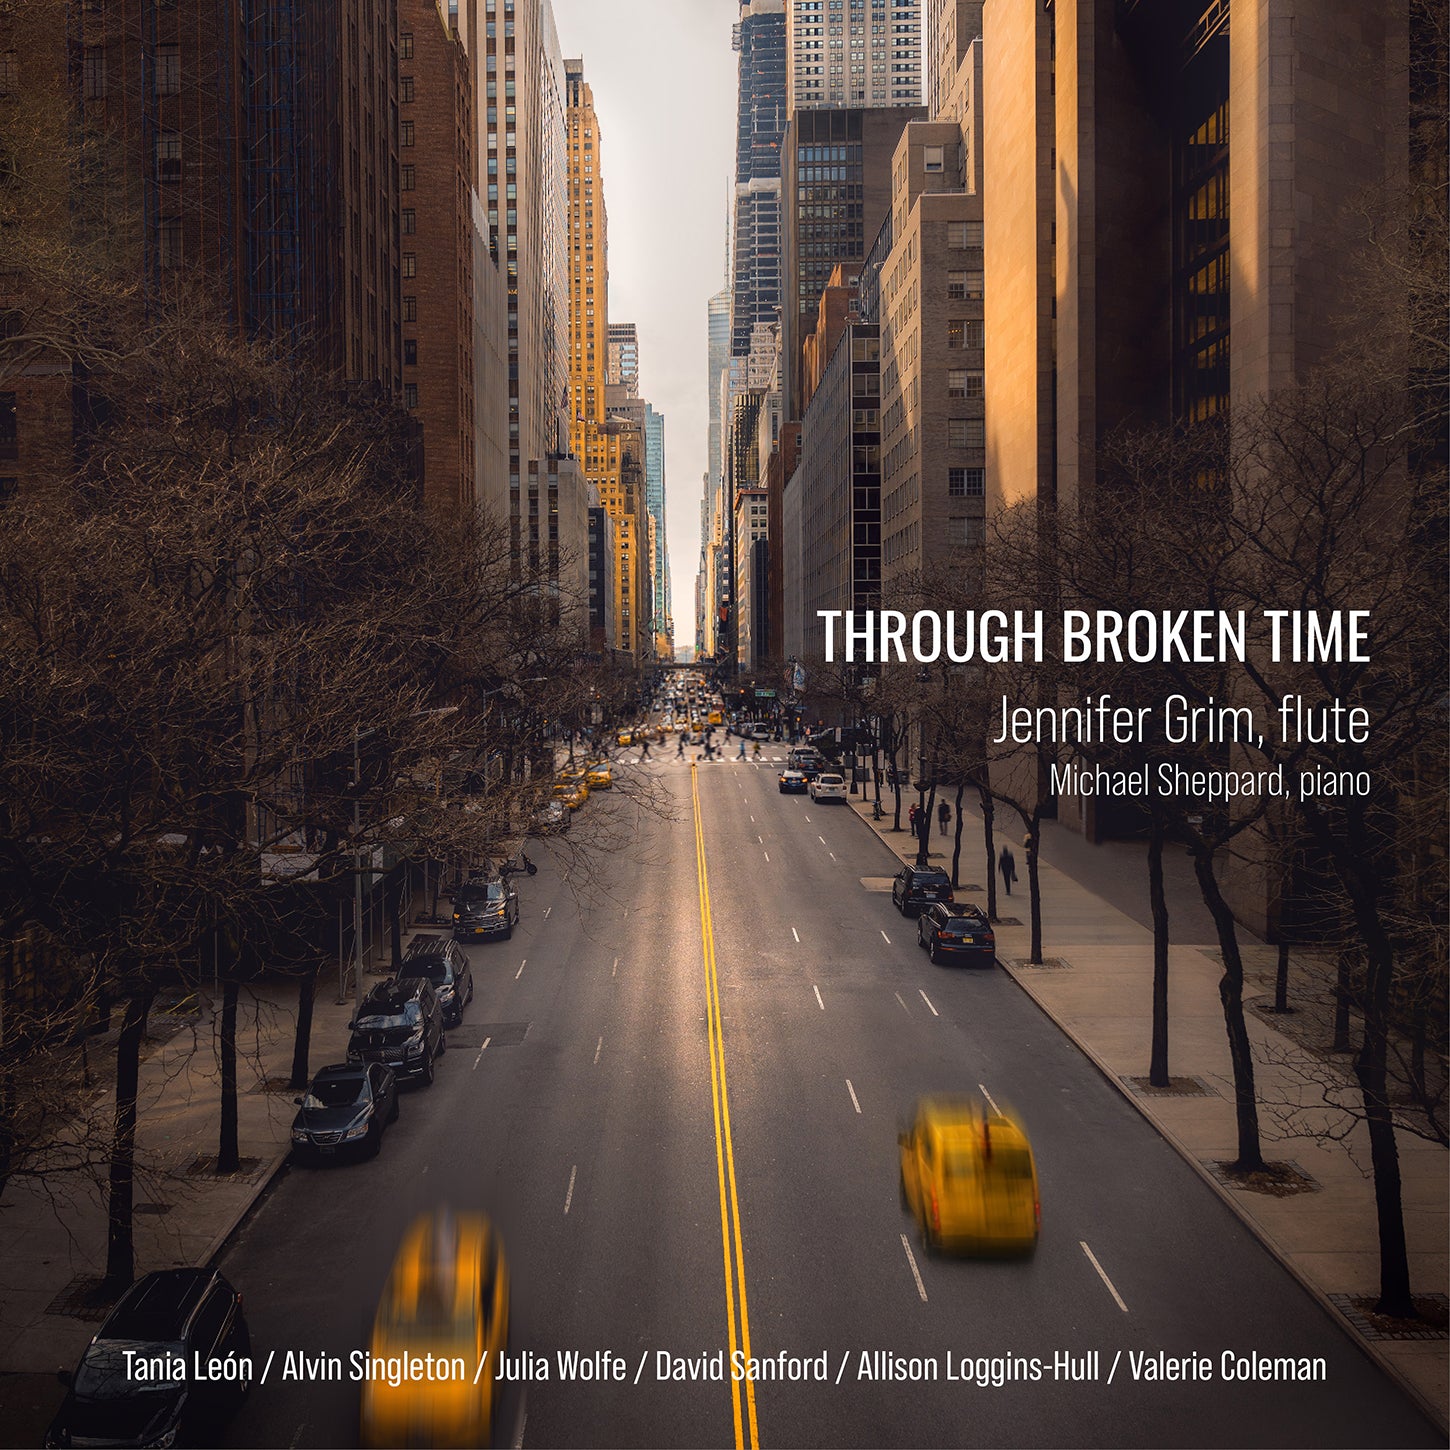 Through Broken Time: Works by León, Singleton, Wolfe & More / Grim, Sheppard